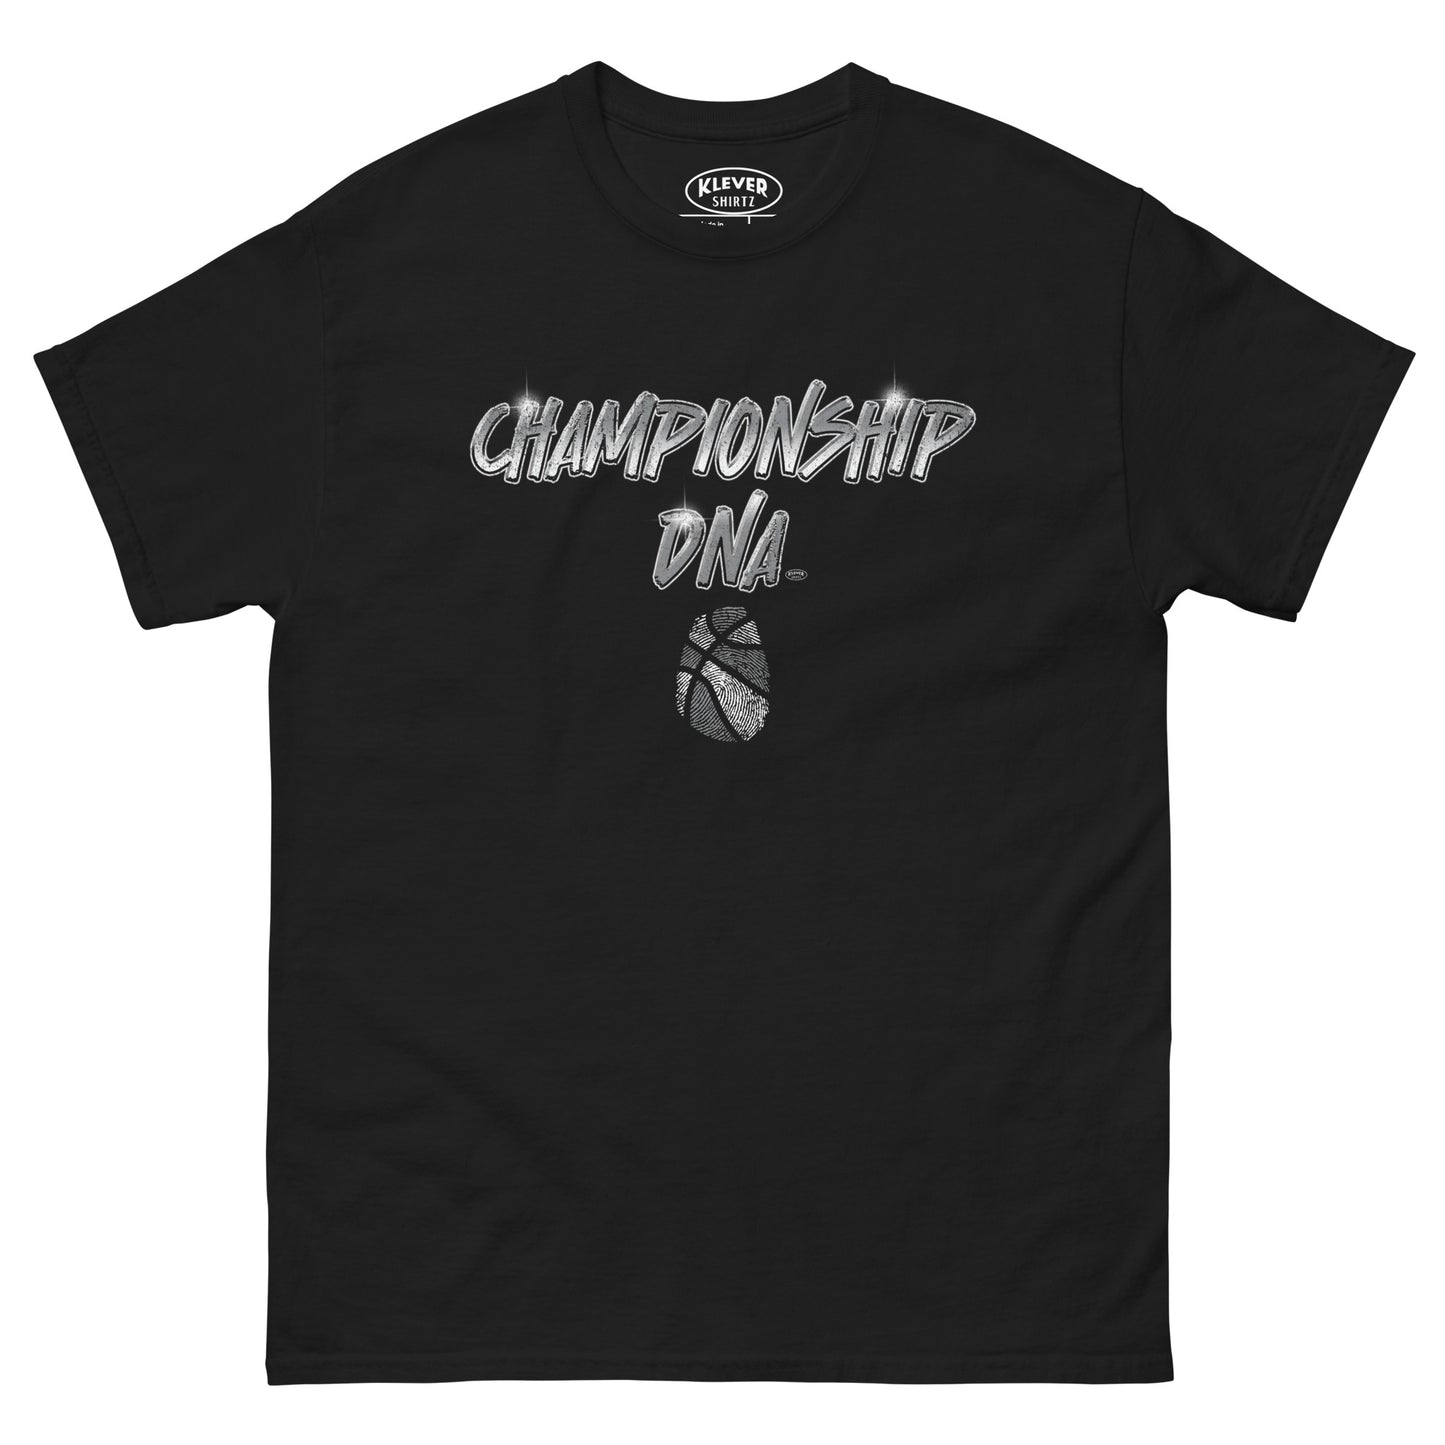 Championship DNA - Klever Shirtz